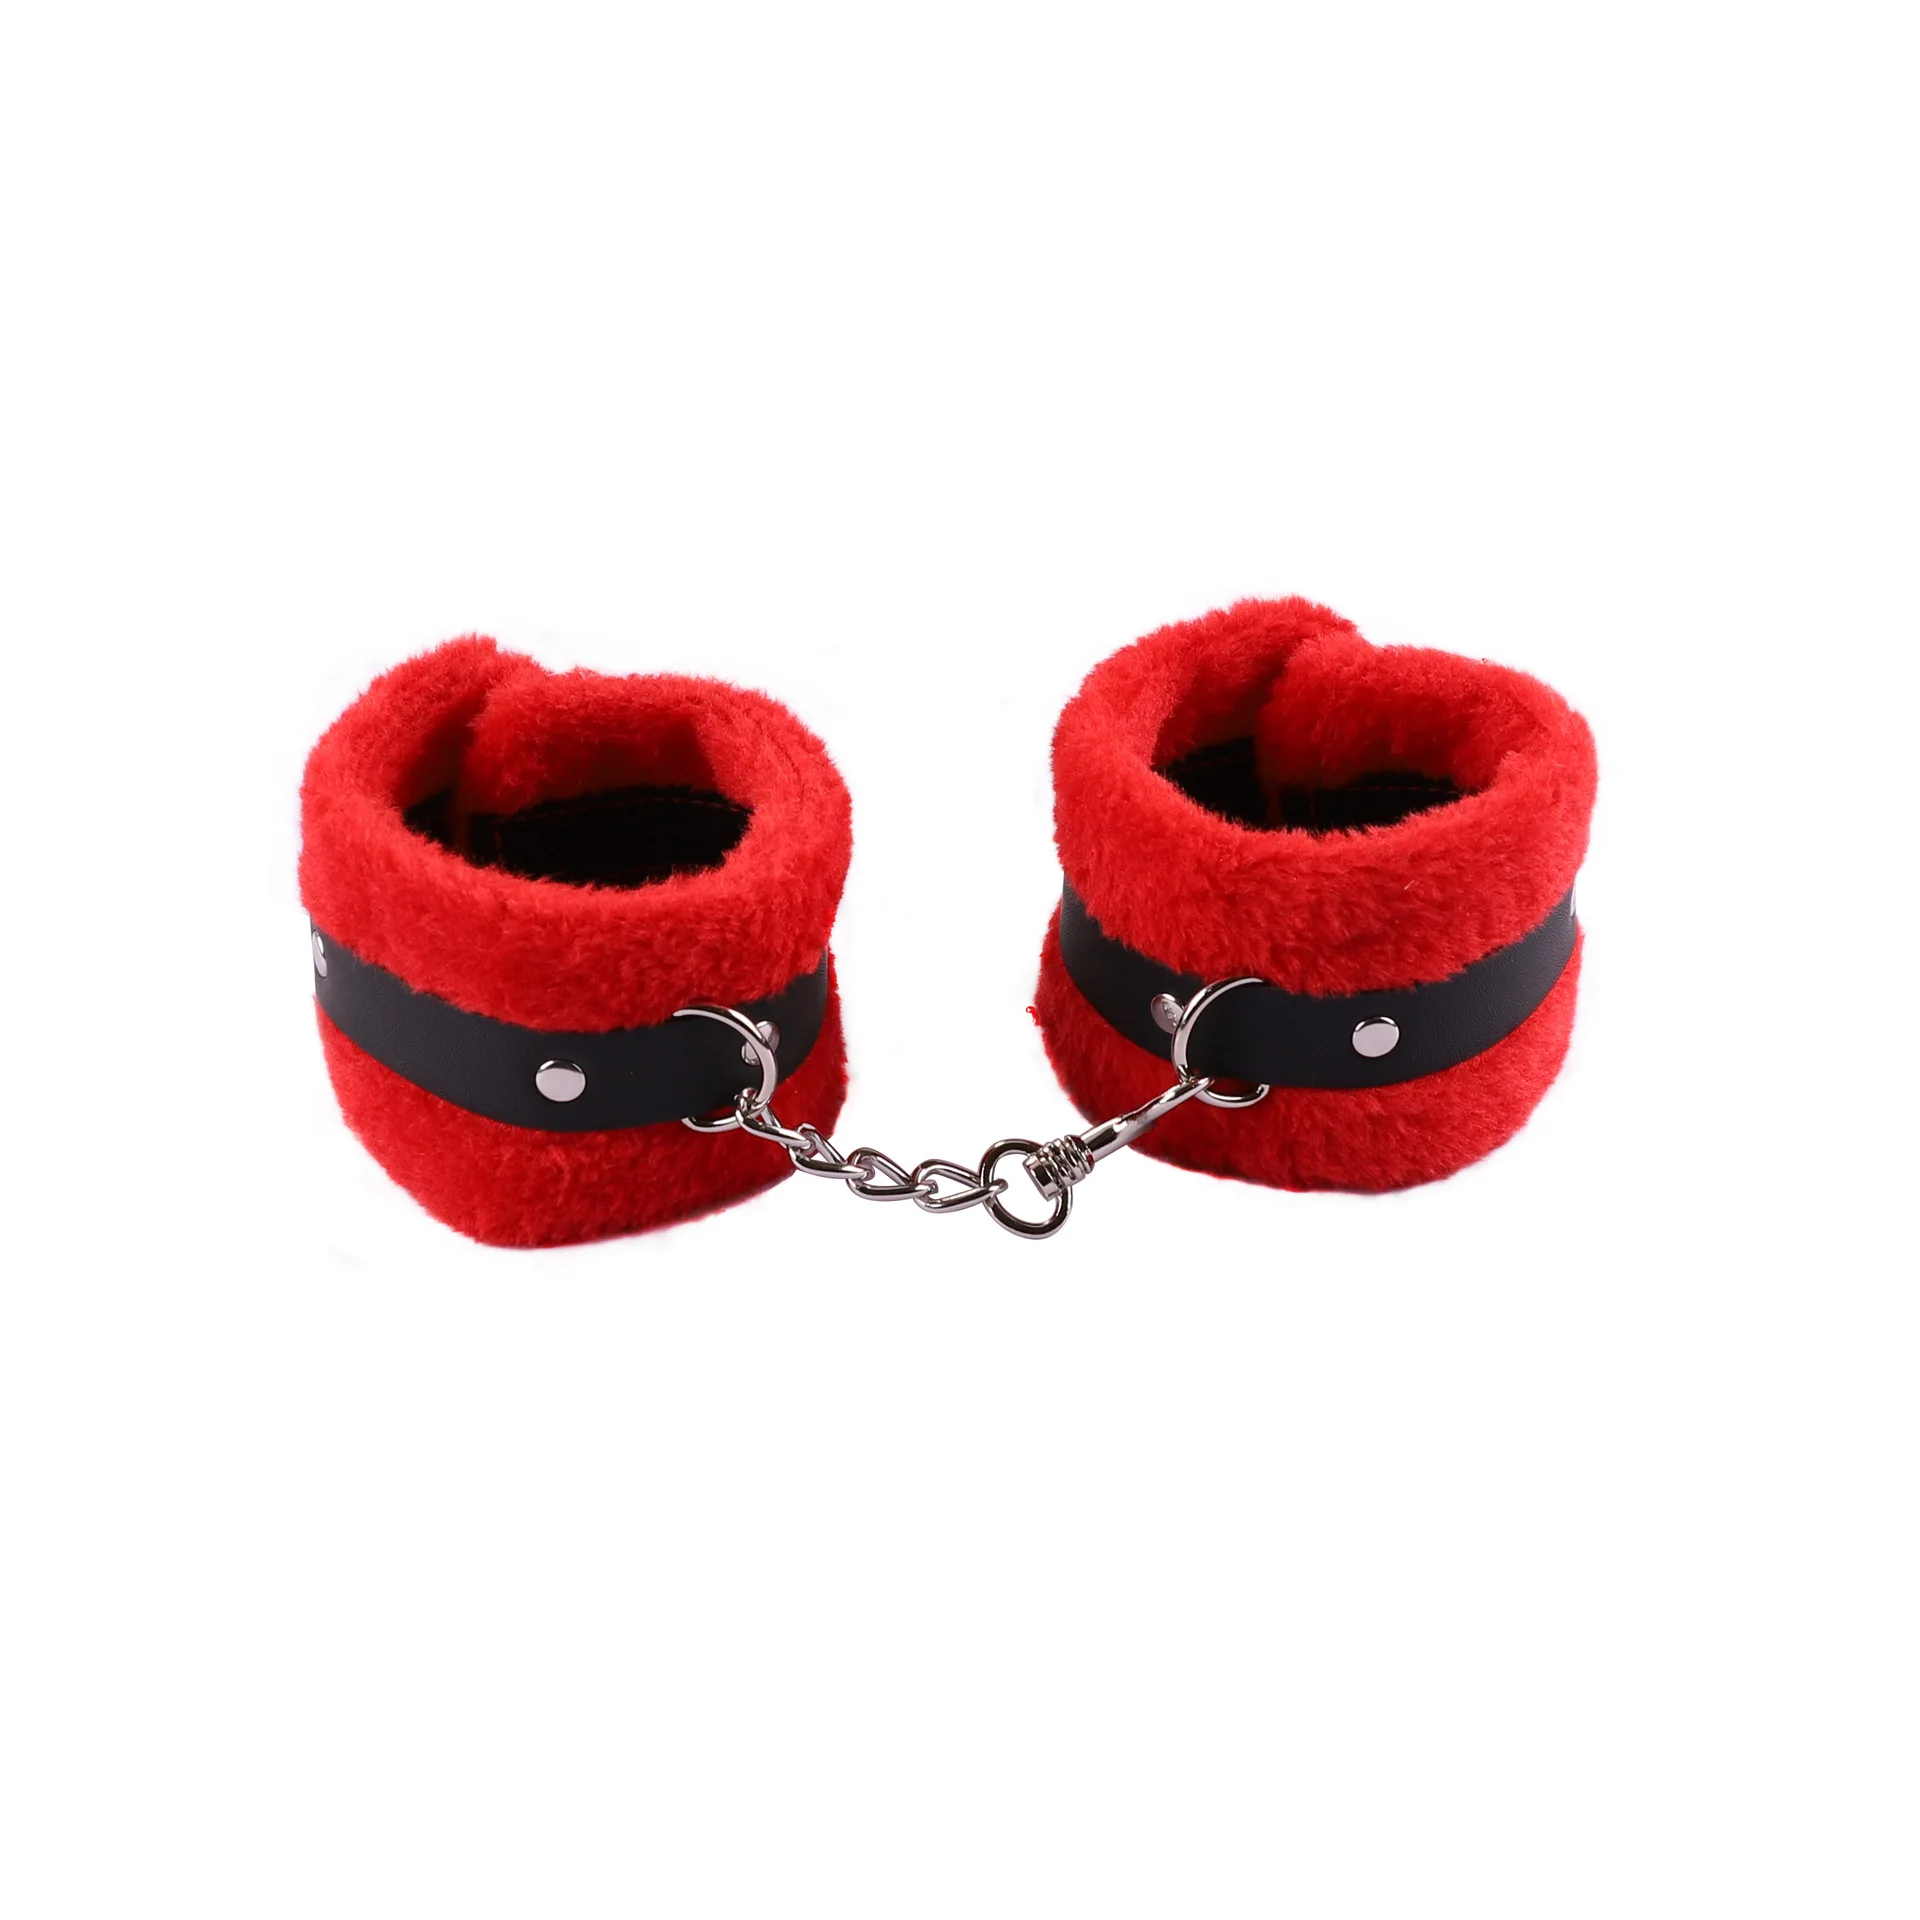 Fluffy Handcuffs Toy Adjustable PU Leather Plush Handcuffs Blindfold Masks Restraints Bondage Sex To